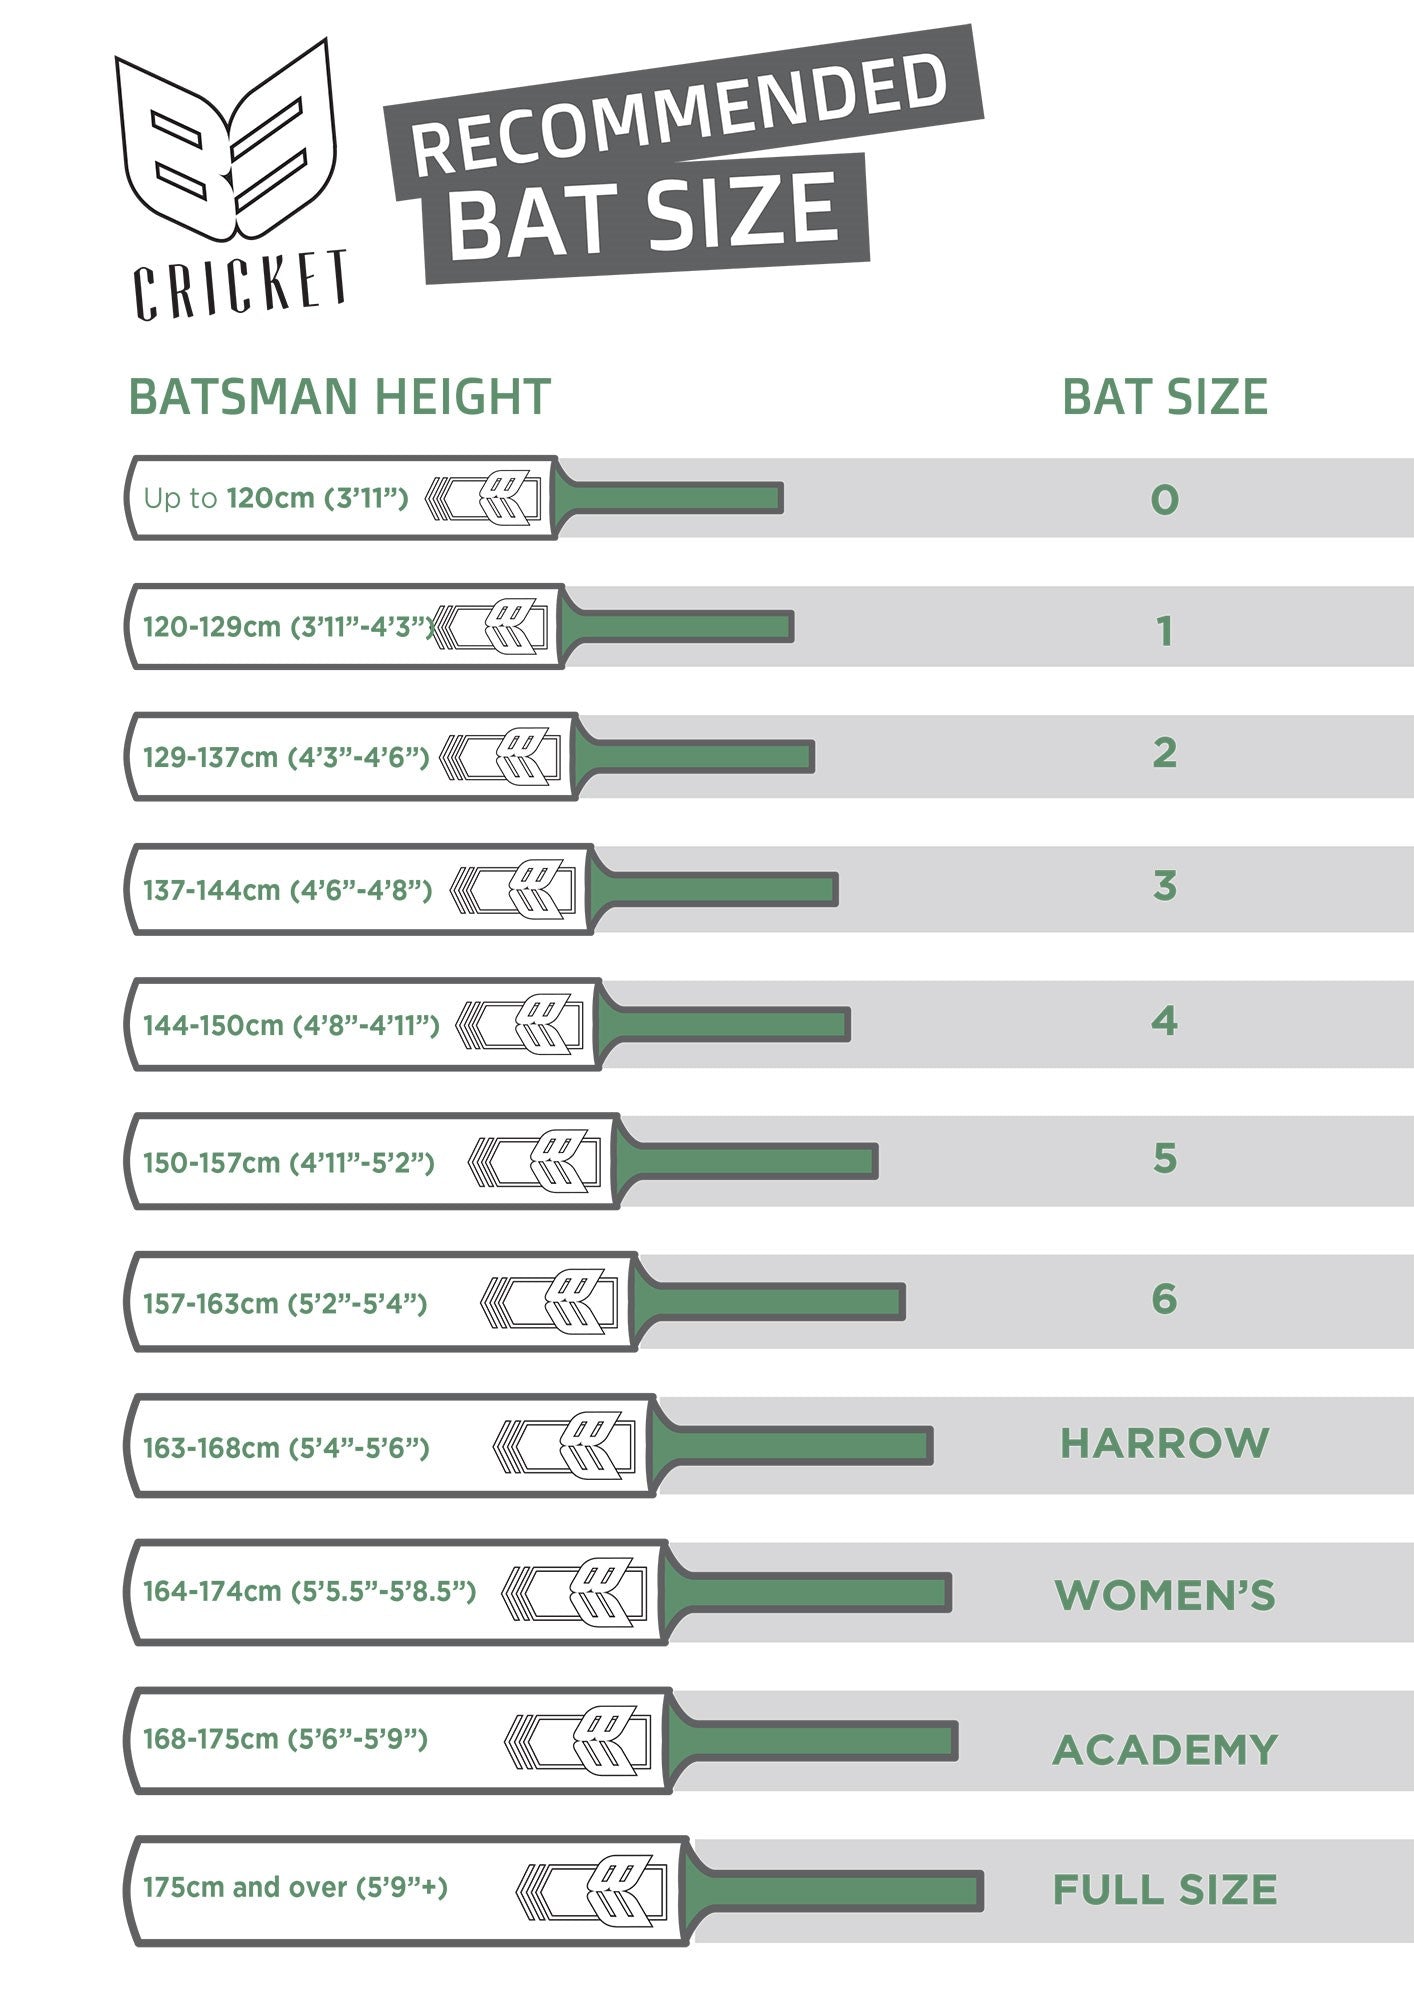 Which Cricket Bat Size do I need